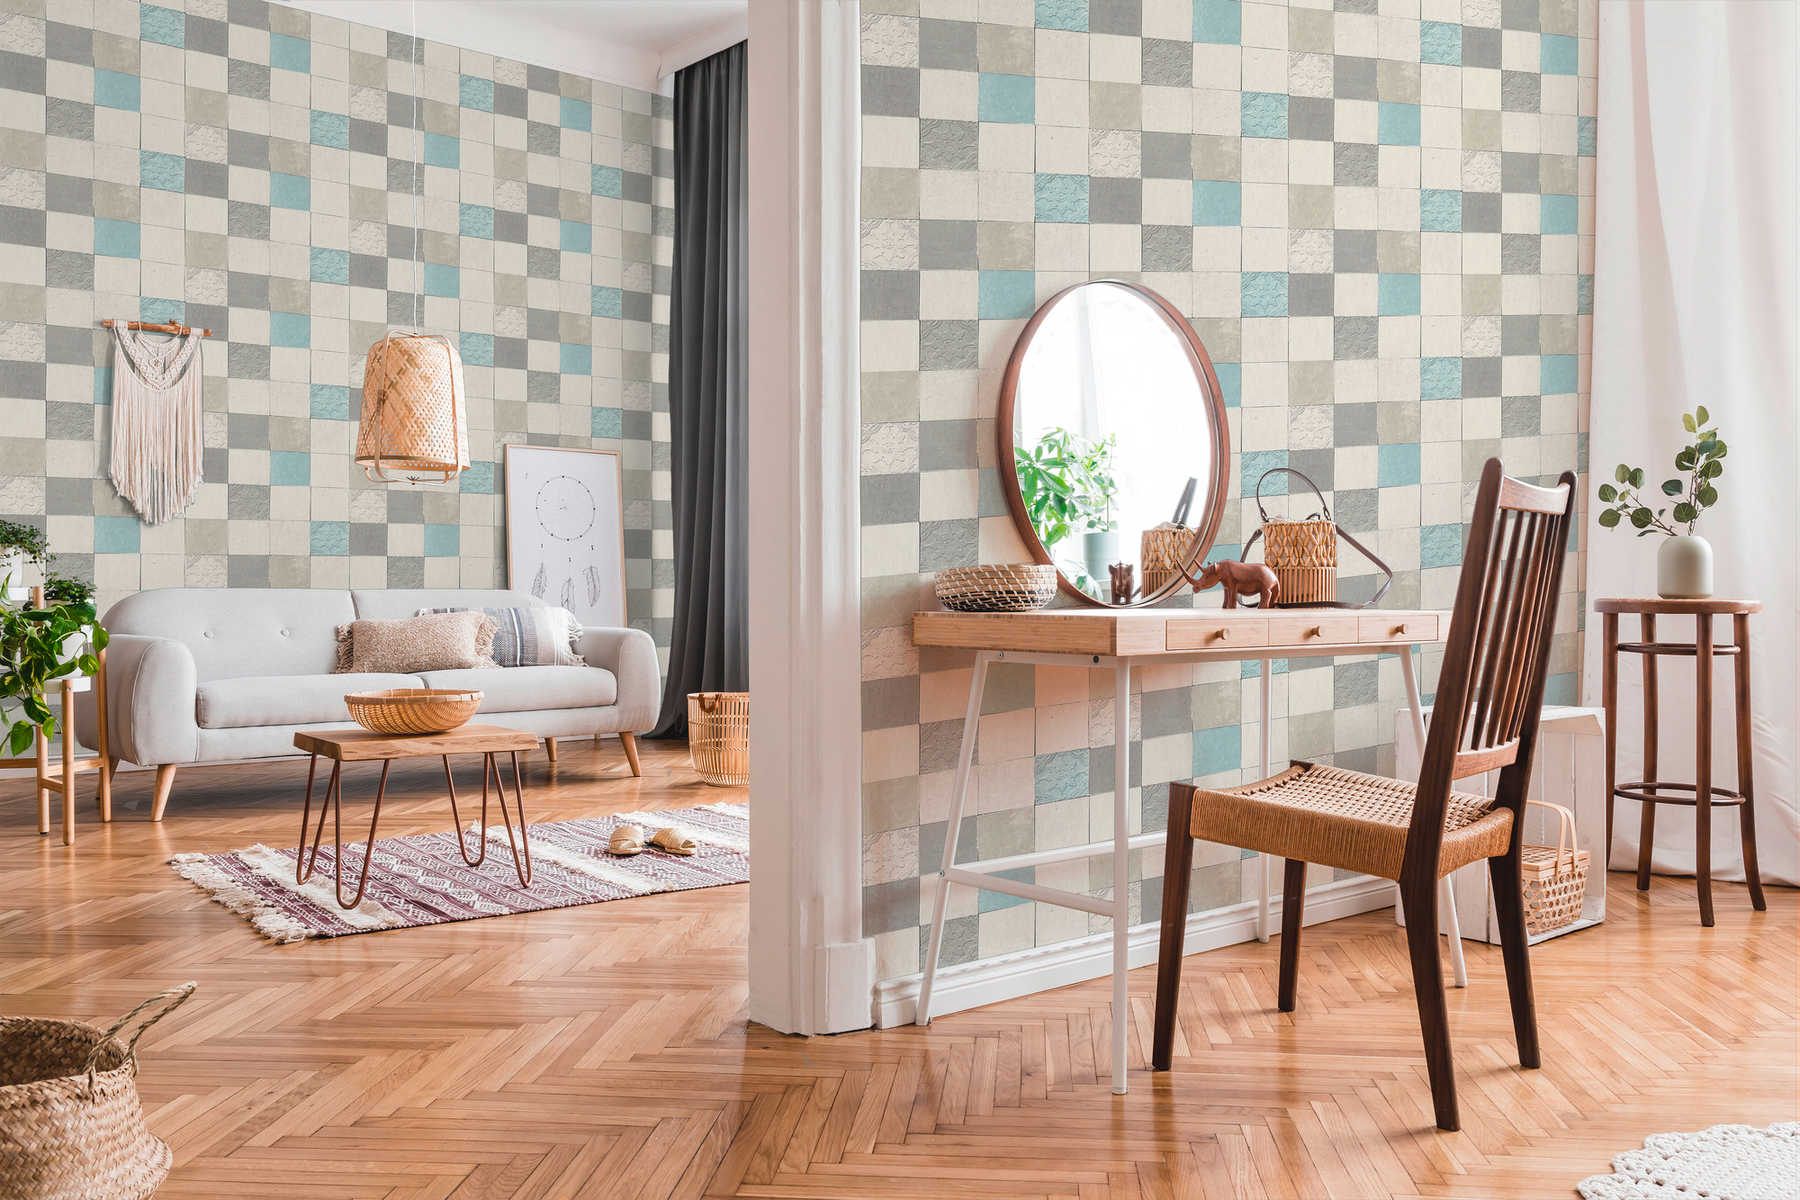             Tile wallpaper decorative tiles mosaic - grey, blue, cream
        